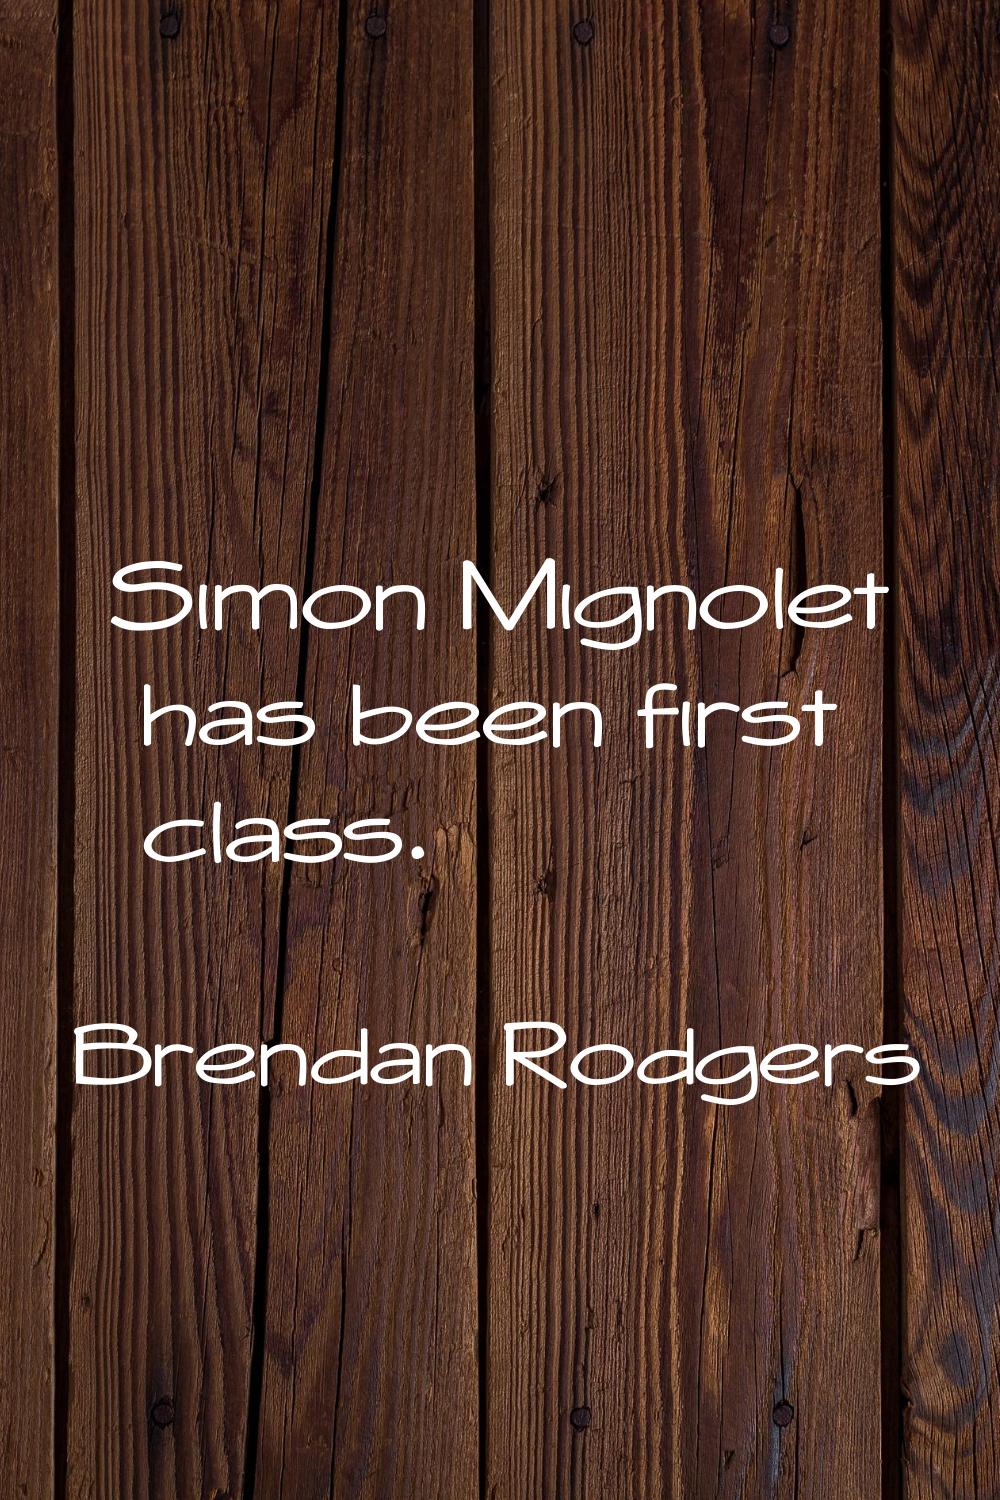 Simon Mignolet has been first class.